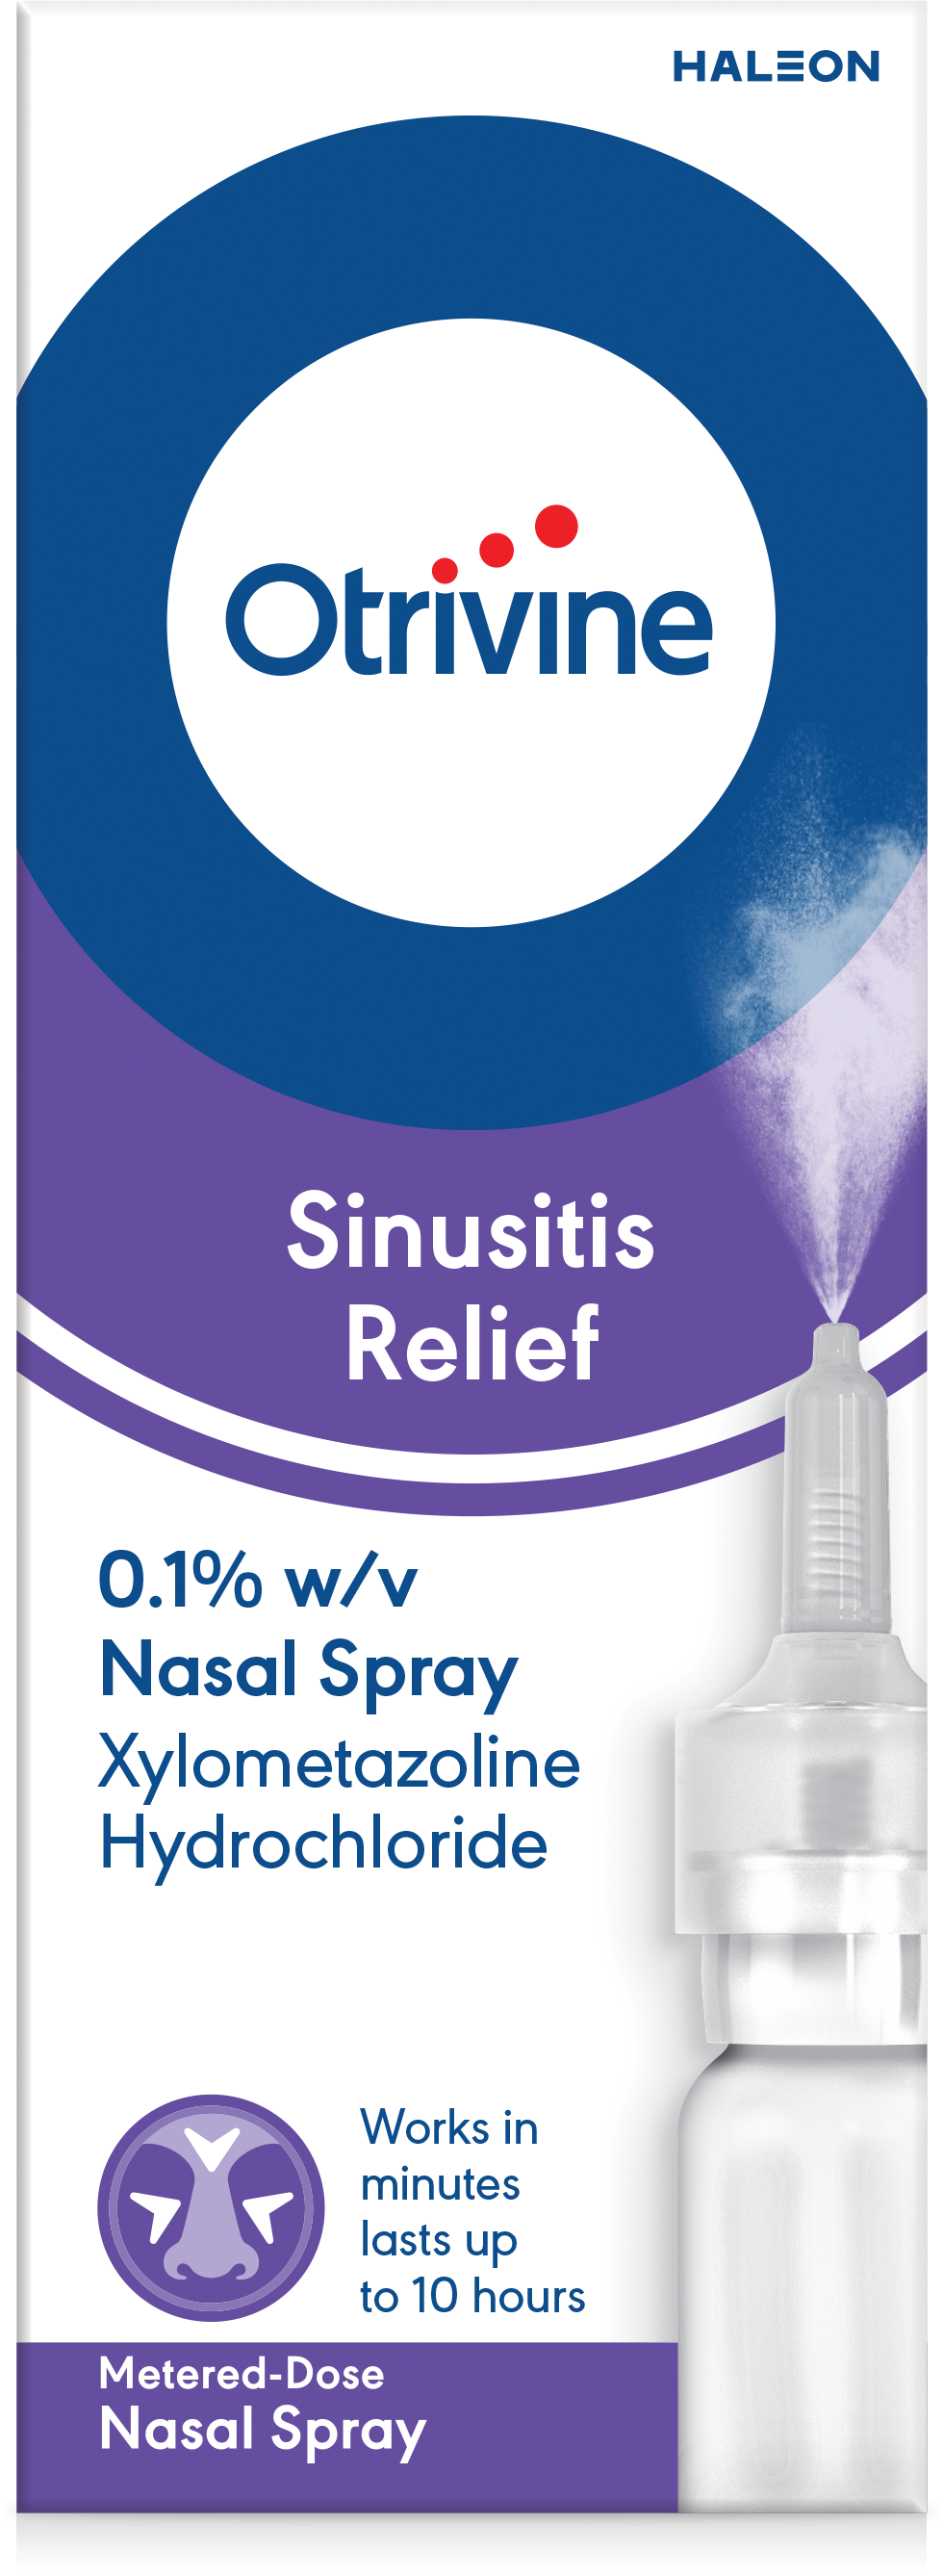 Otrivine Sinusitis Adult Measured Dose 0.1% Nasal Spray 10ml